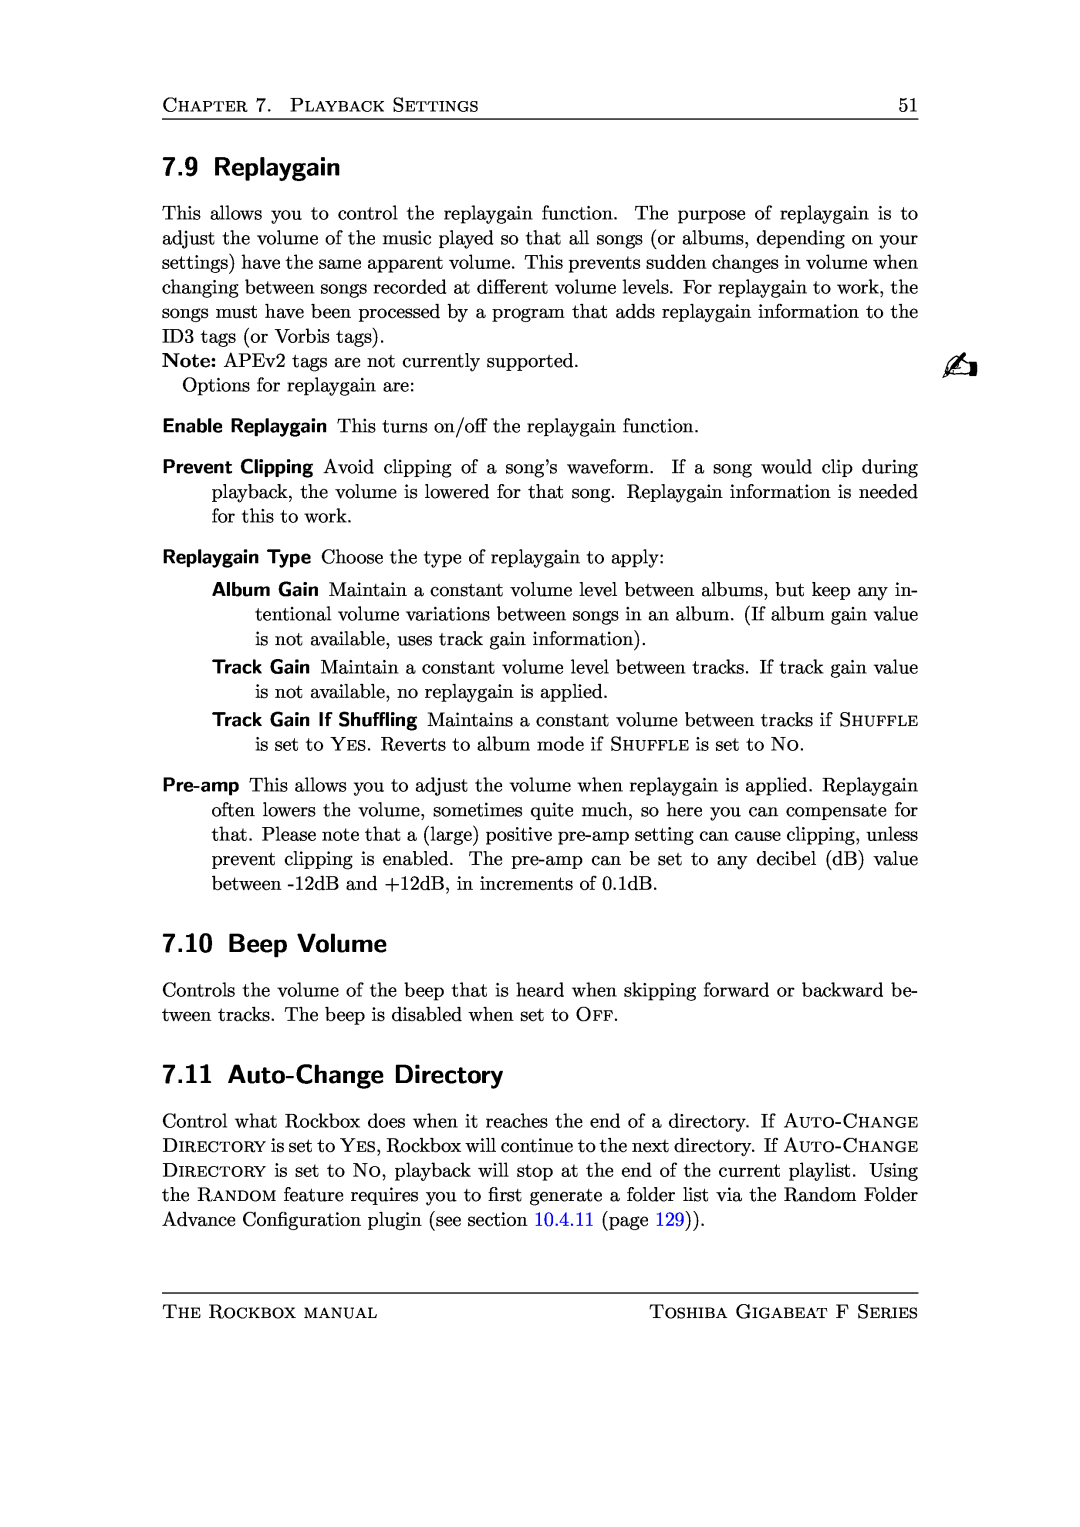 Toshiba F Series manual Replaygain, Beep Volume, Auto-Change Directory 